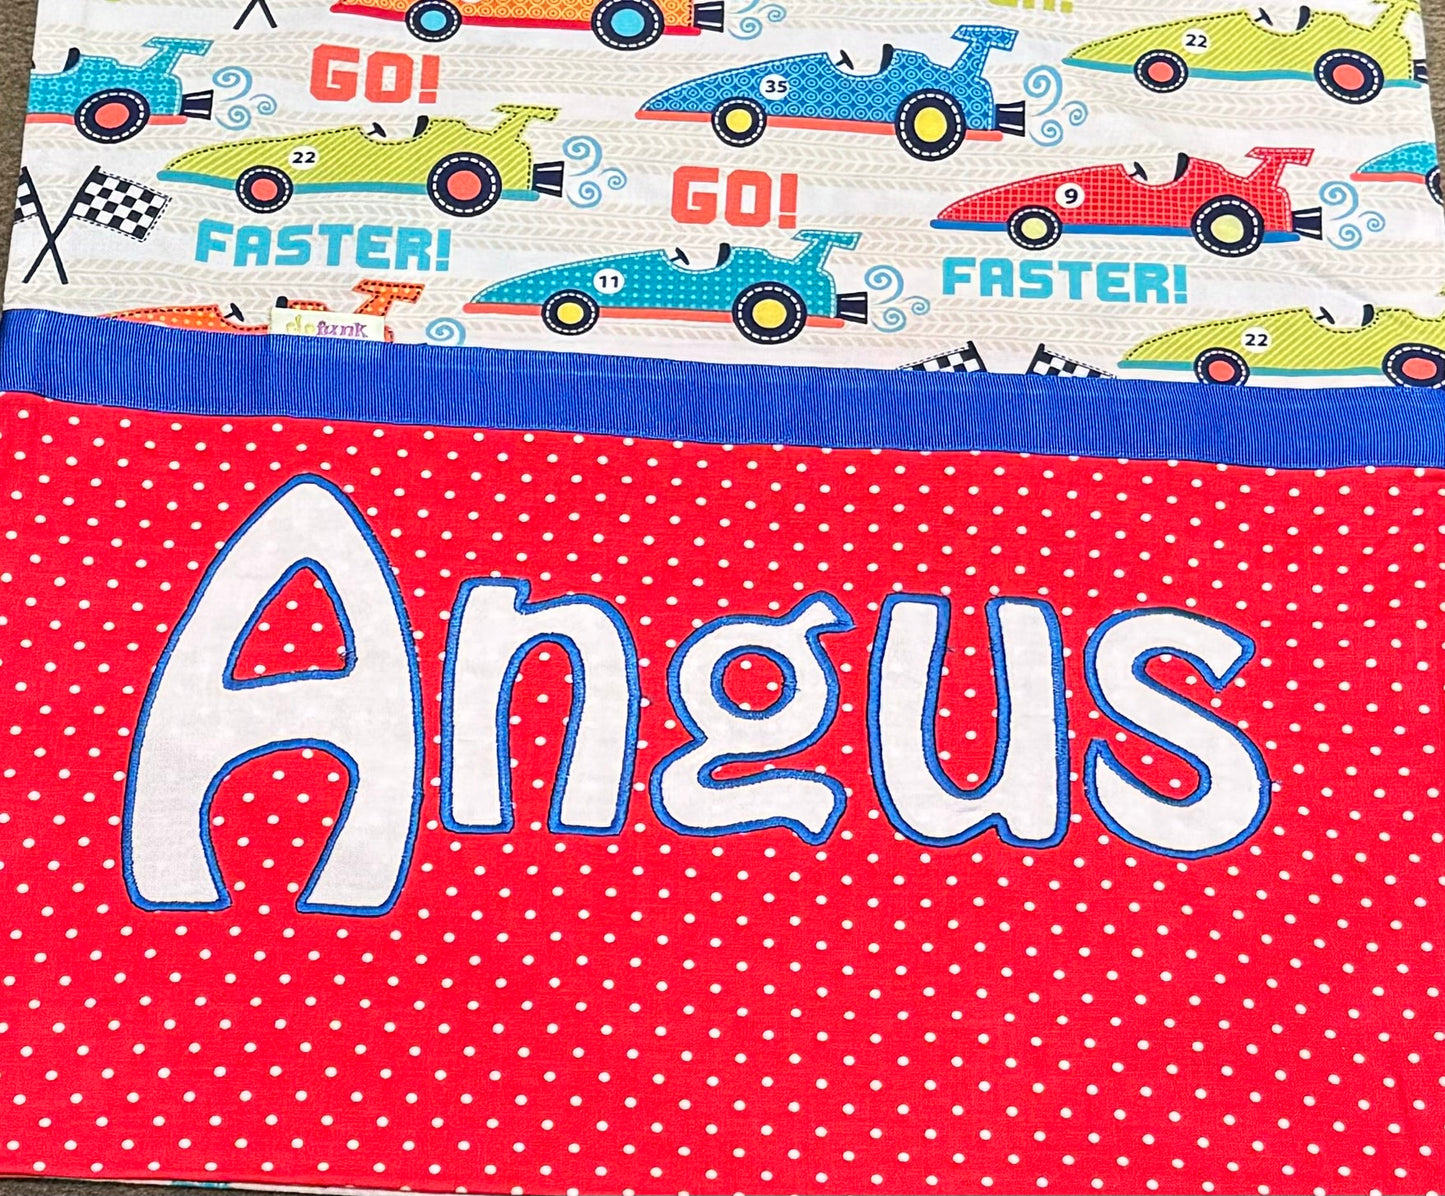 Angus Handmade Personalised Cushion Cover